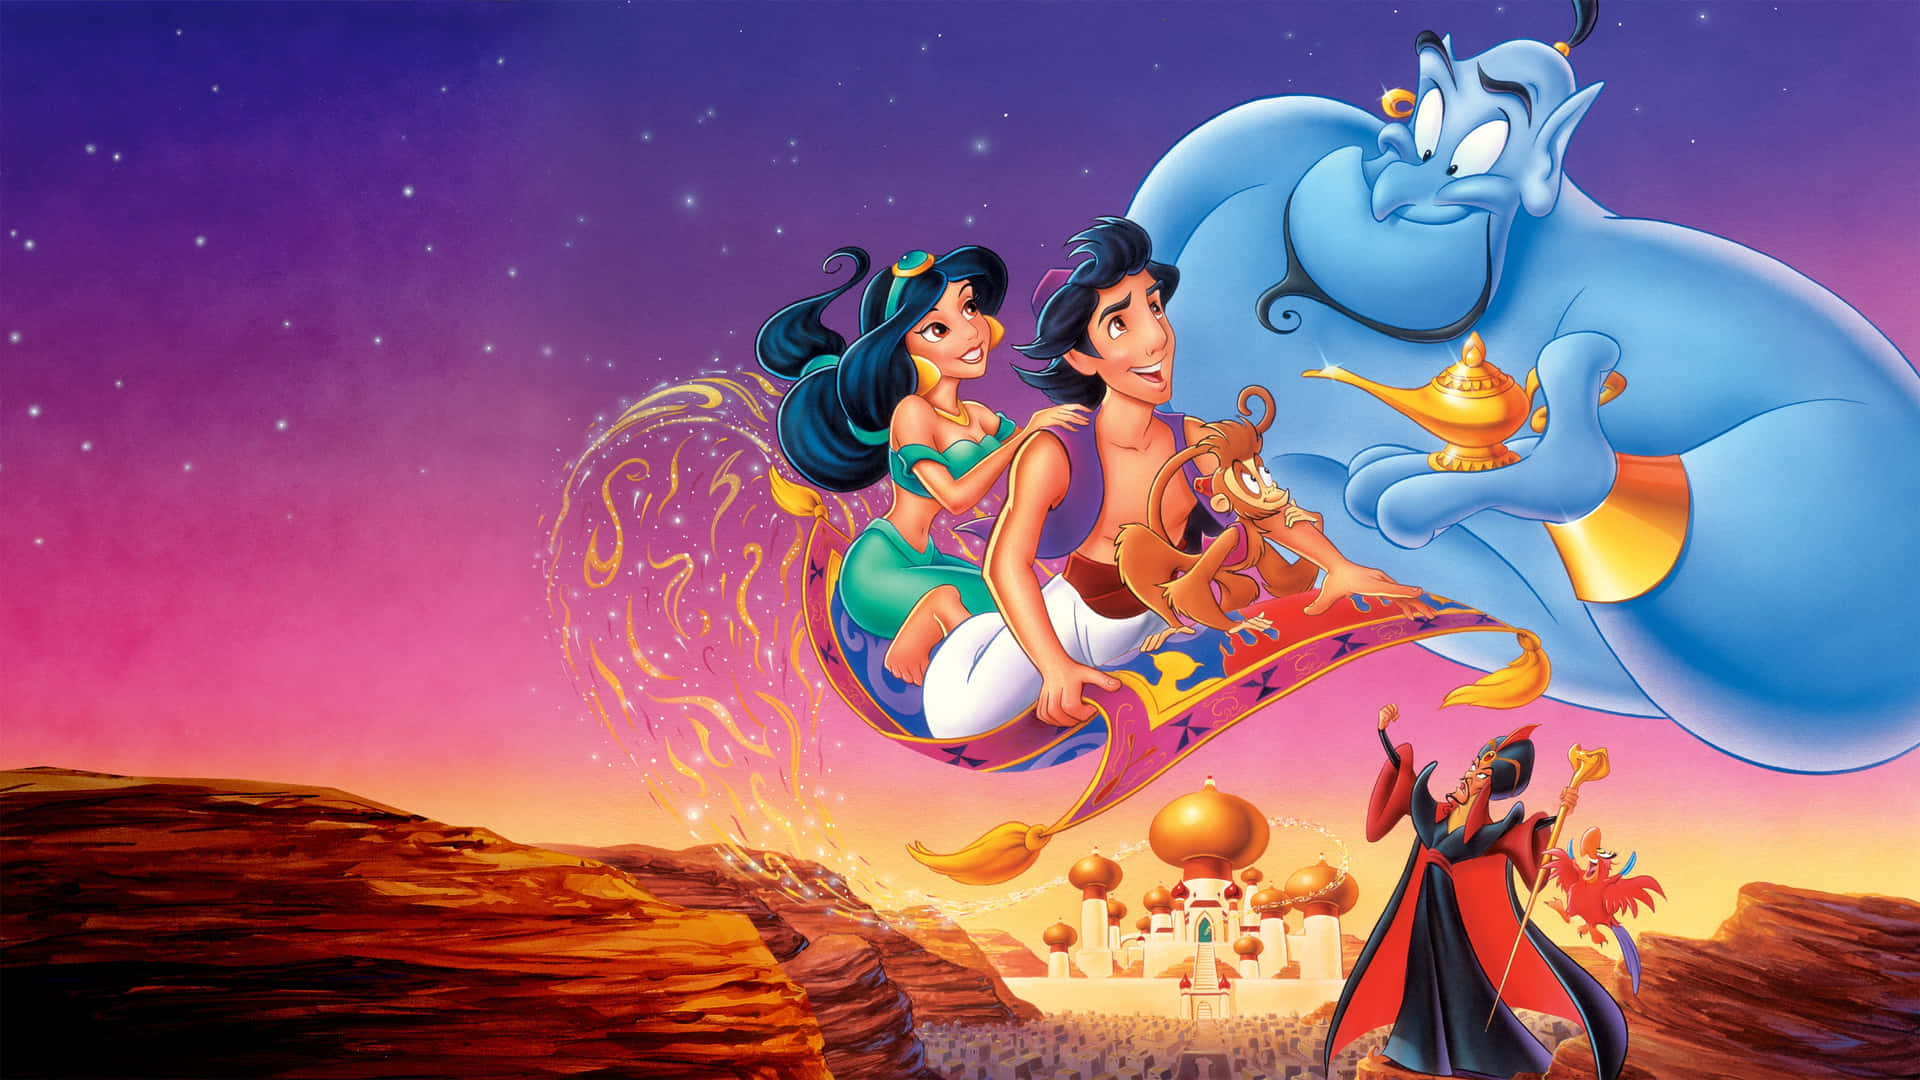 Join Aladdin and Princess Jasmine on a magical journey!